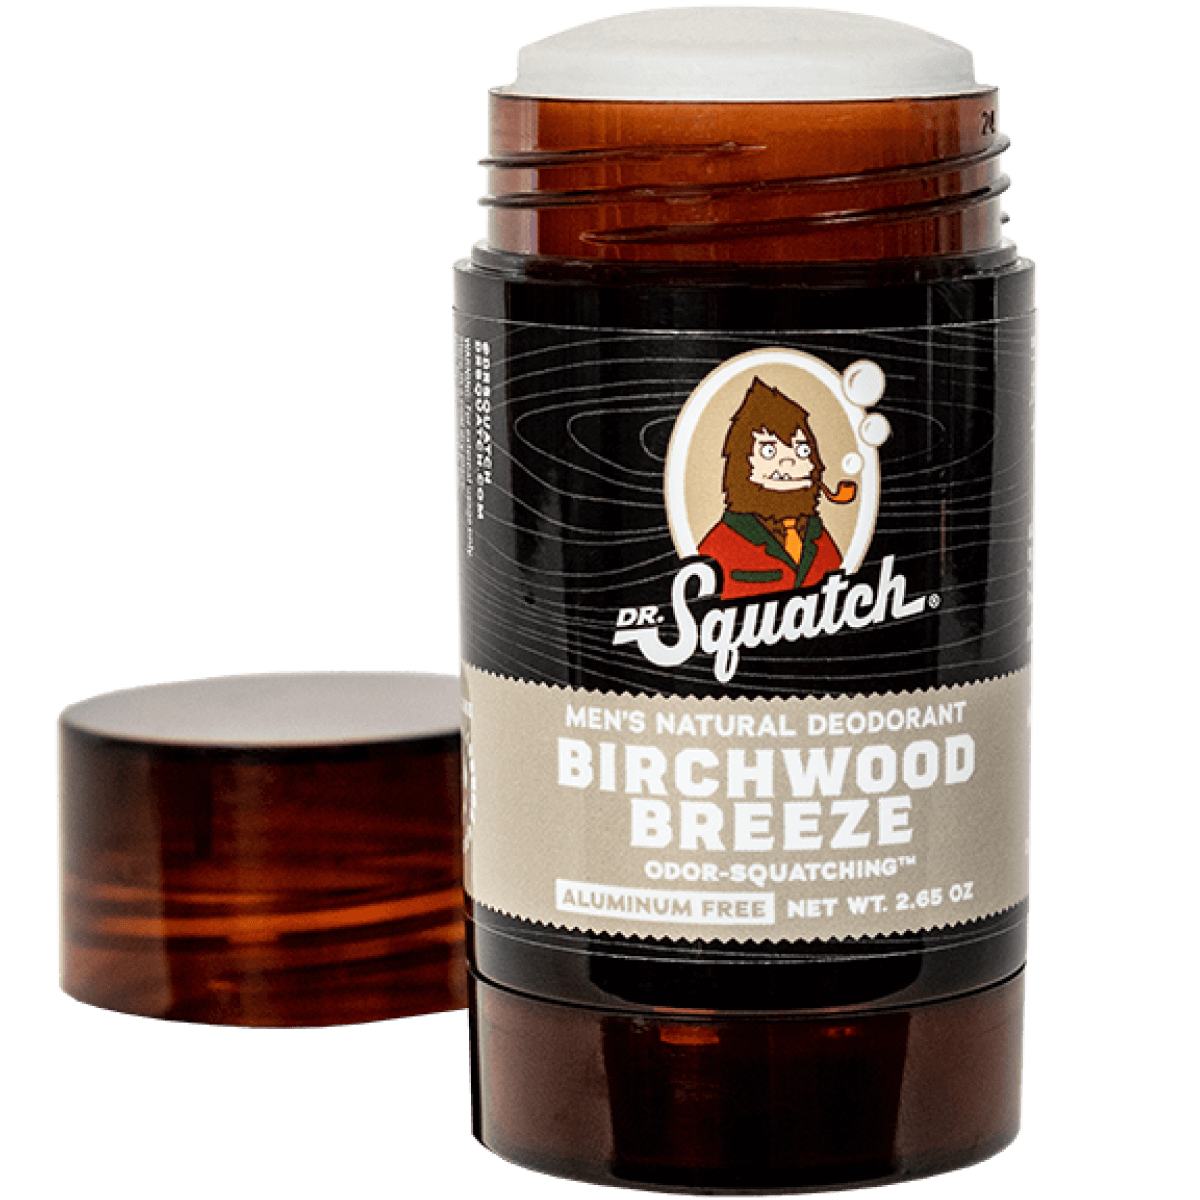 Dr. Squatch Men's Natural Deodorant Birchwood Breeze